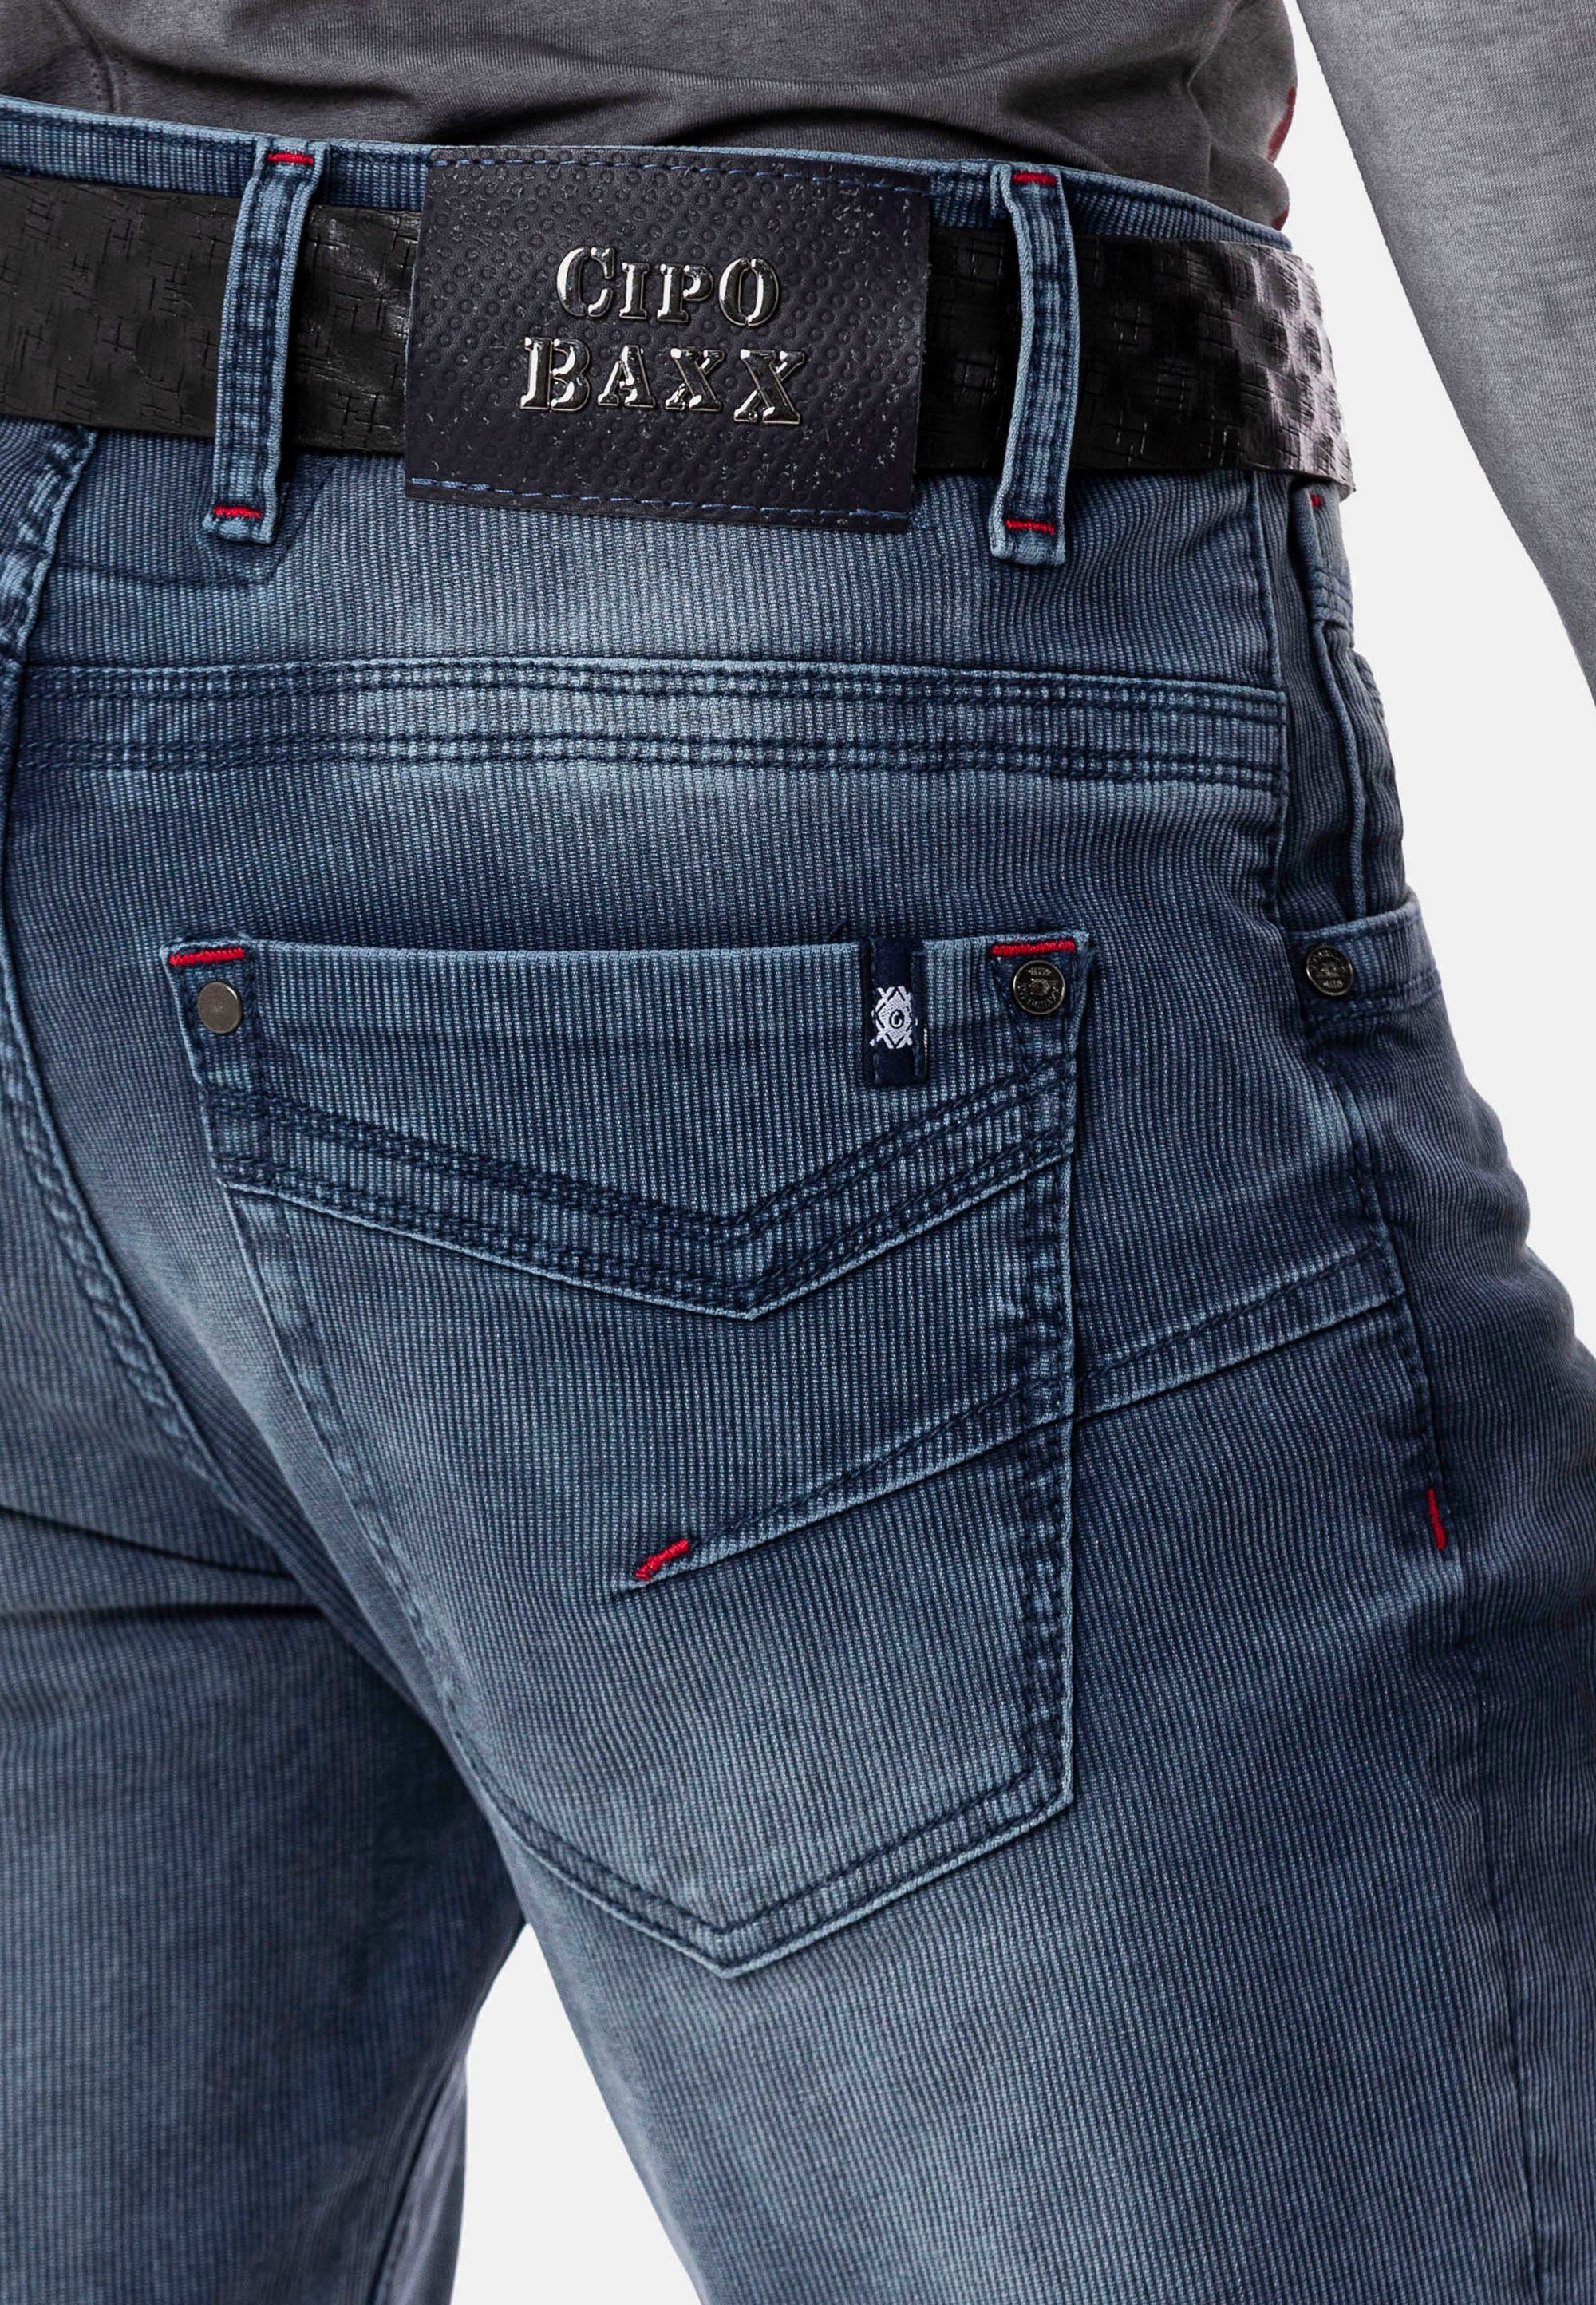 Cipo & Straight-Jeans in Cord-Design stilvollem blau Baxx